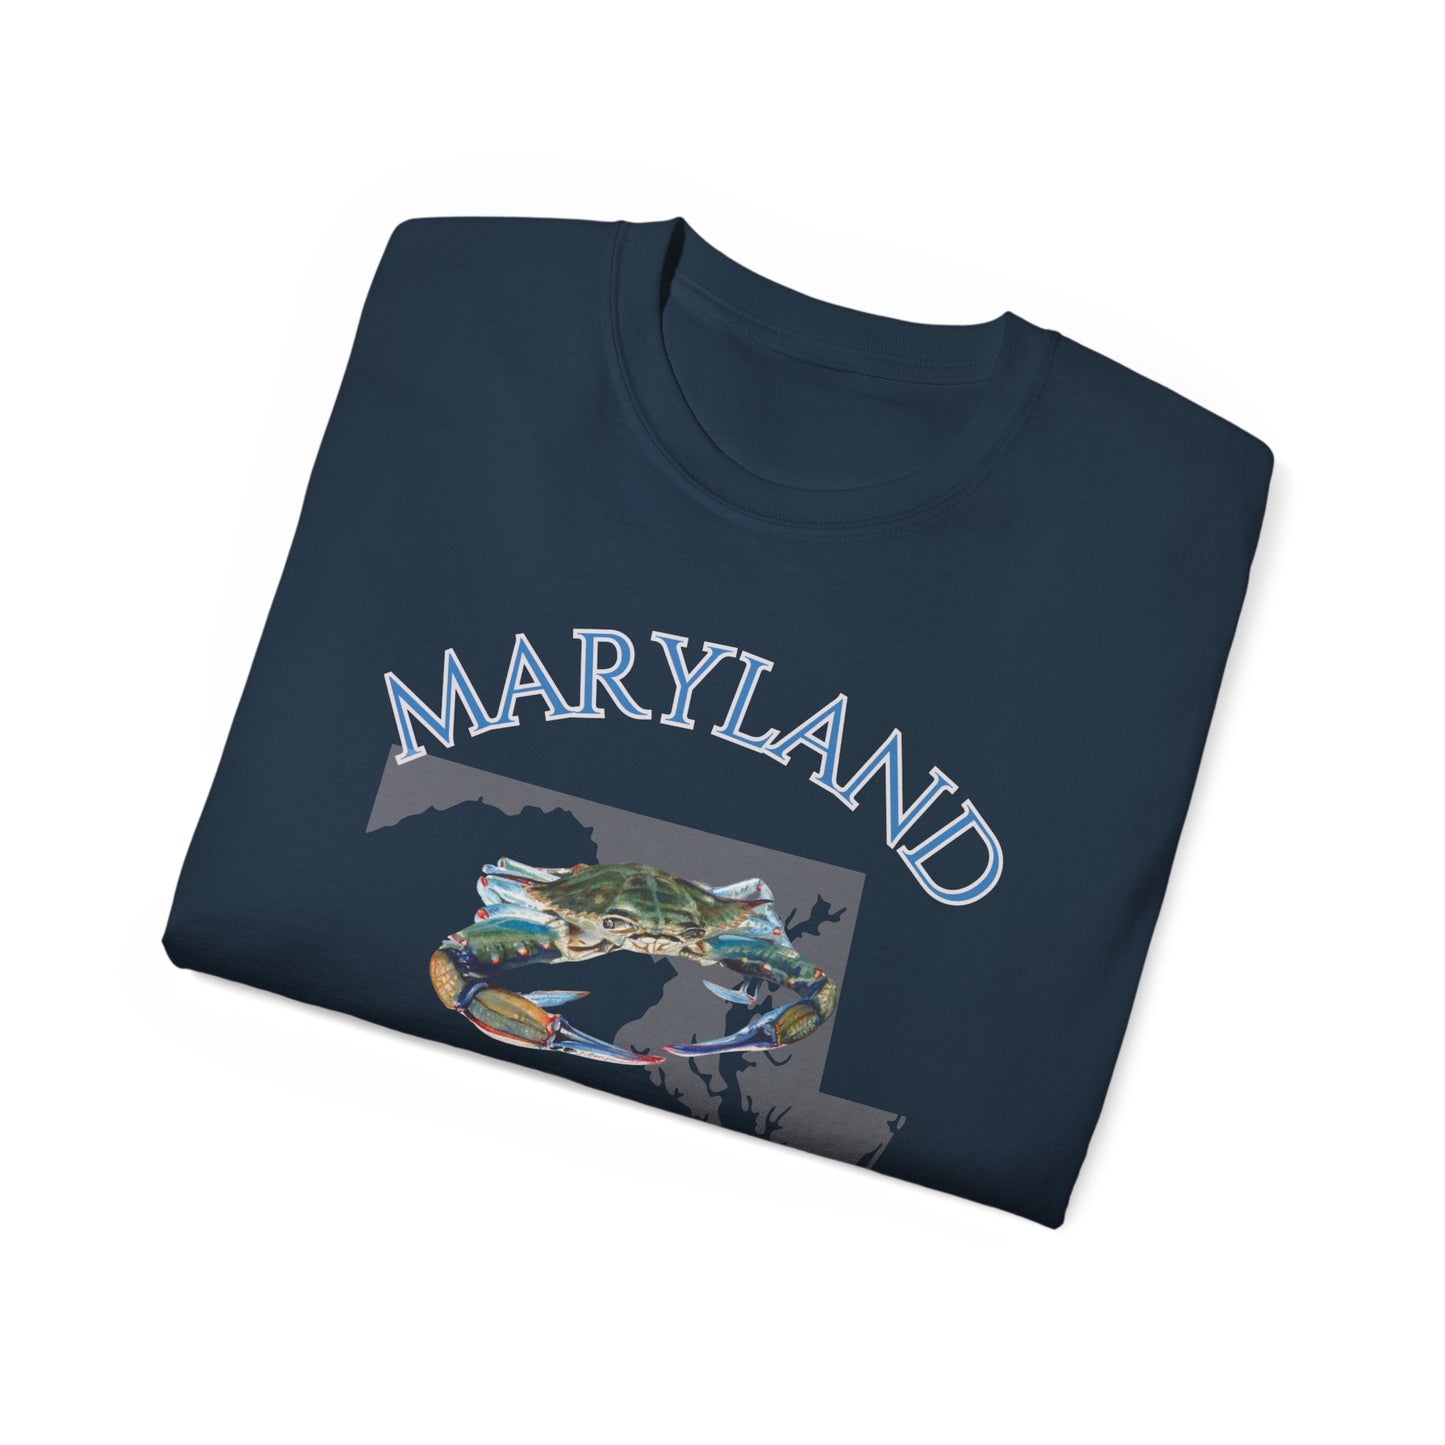 Maryland Blue T-Shirt